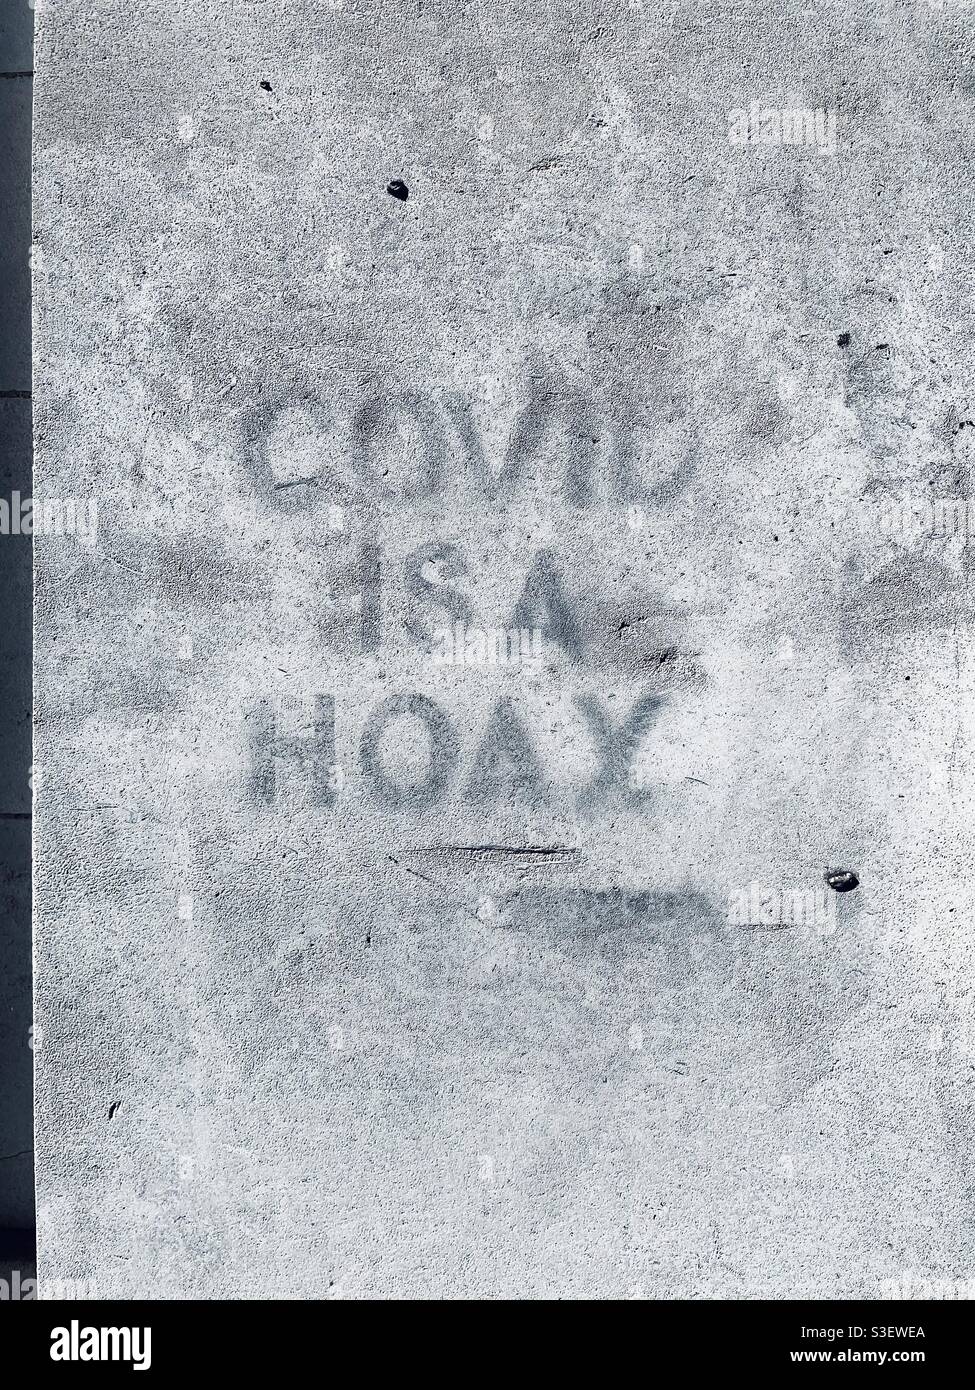 Covid is a hoax, stencilled graffiti in 2020 Stock Photo